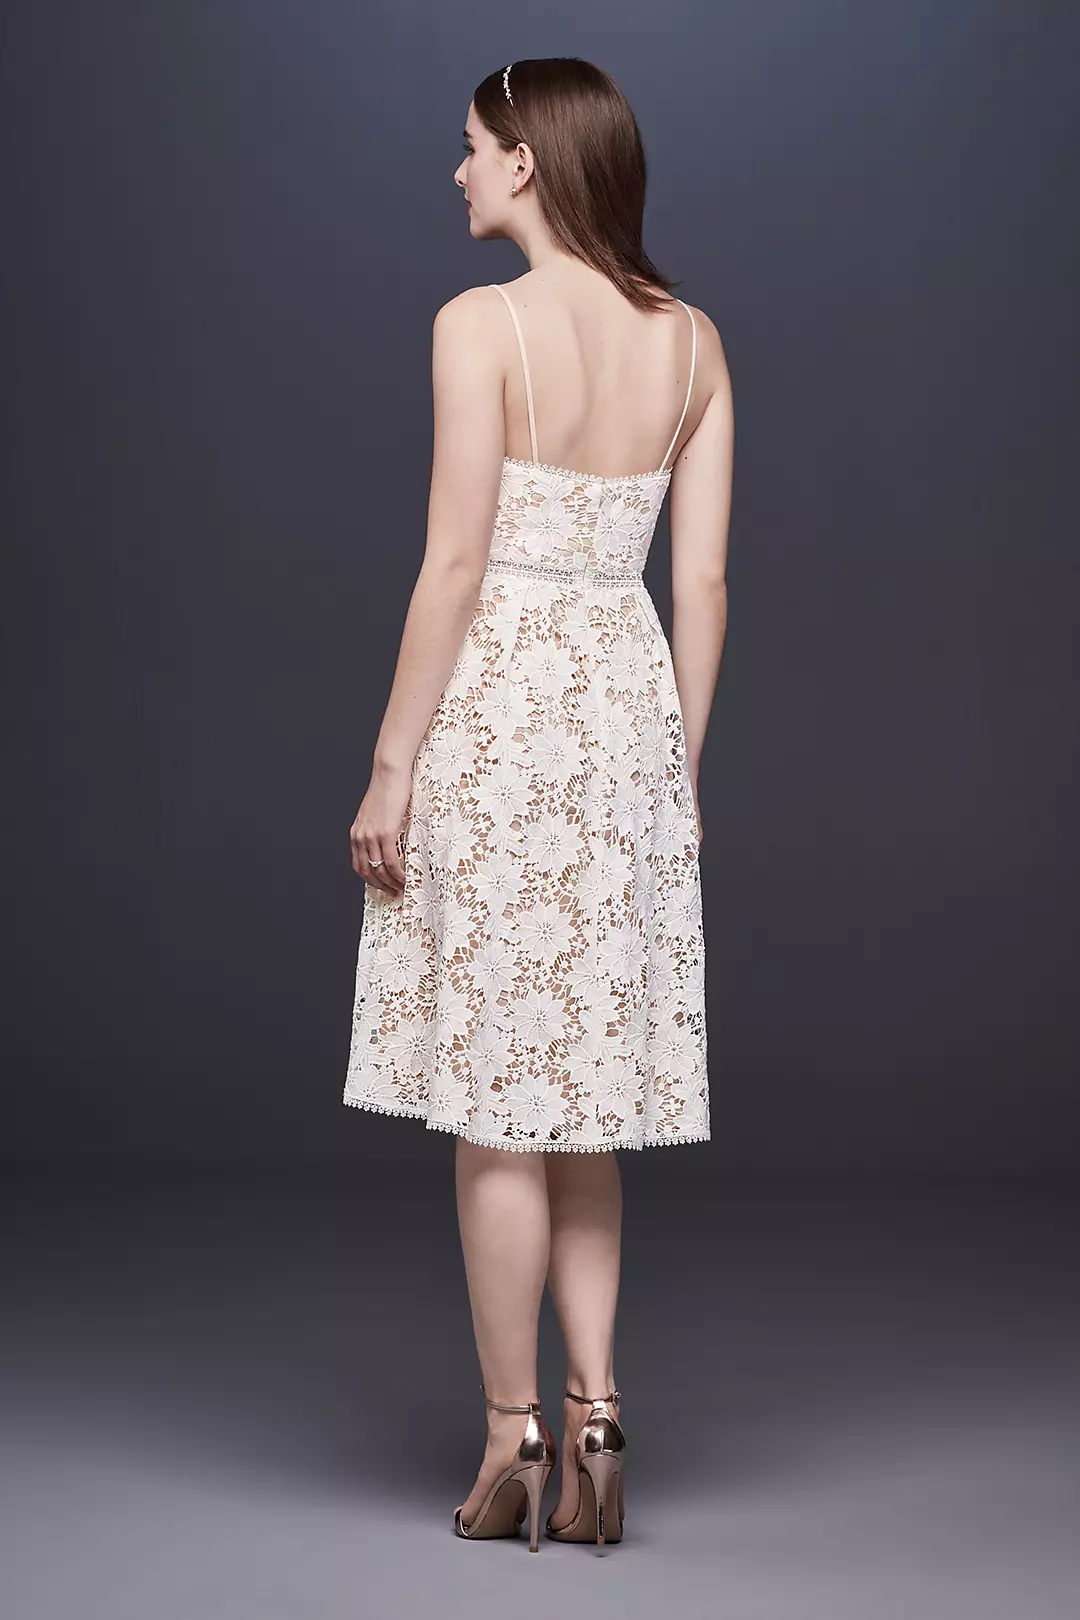 Short Lace Wedding Dress with Illusion Waist Image 2